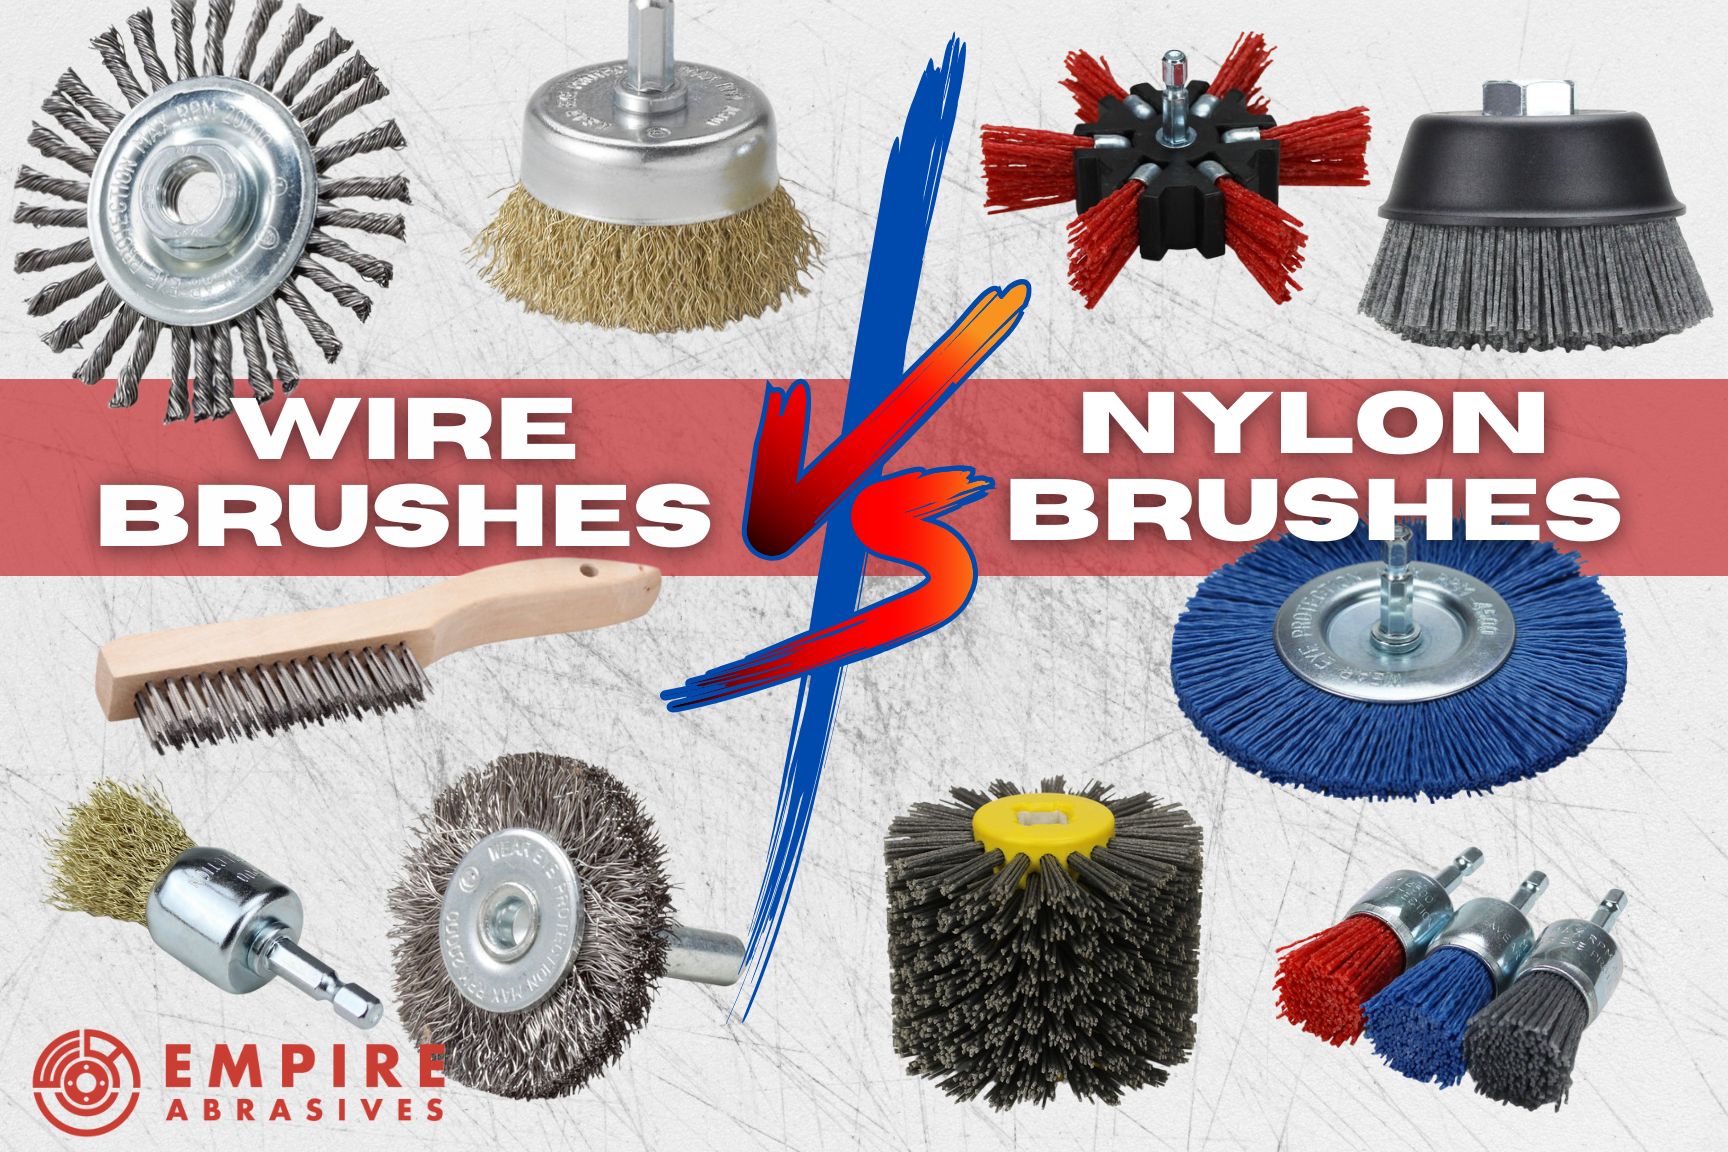 https://www.empireabrasives.com/product_images/uploaded_images/wire-brushes-vs-nylon-brushes-abrasive-products.jpg